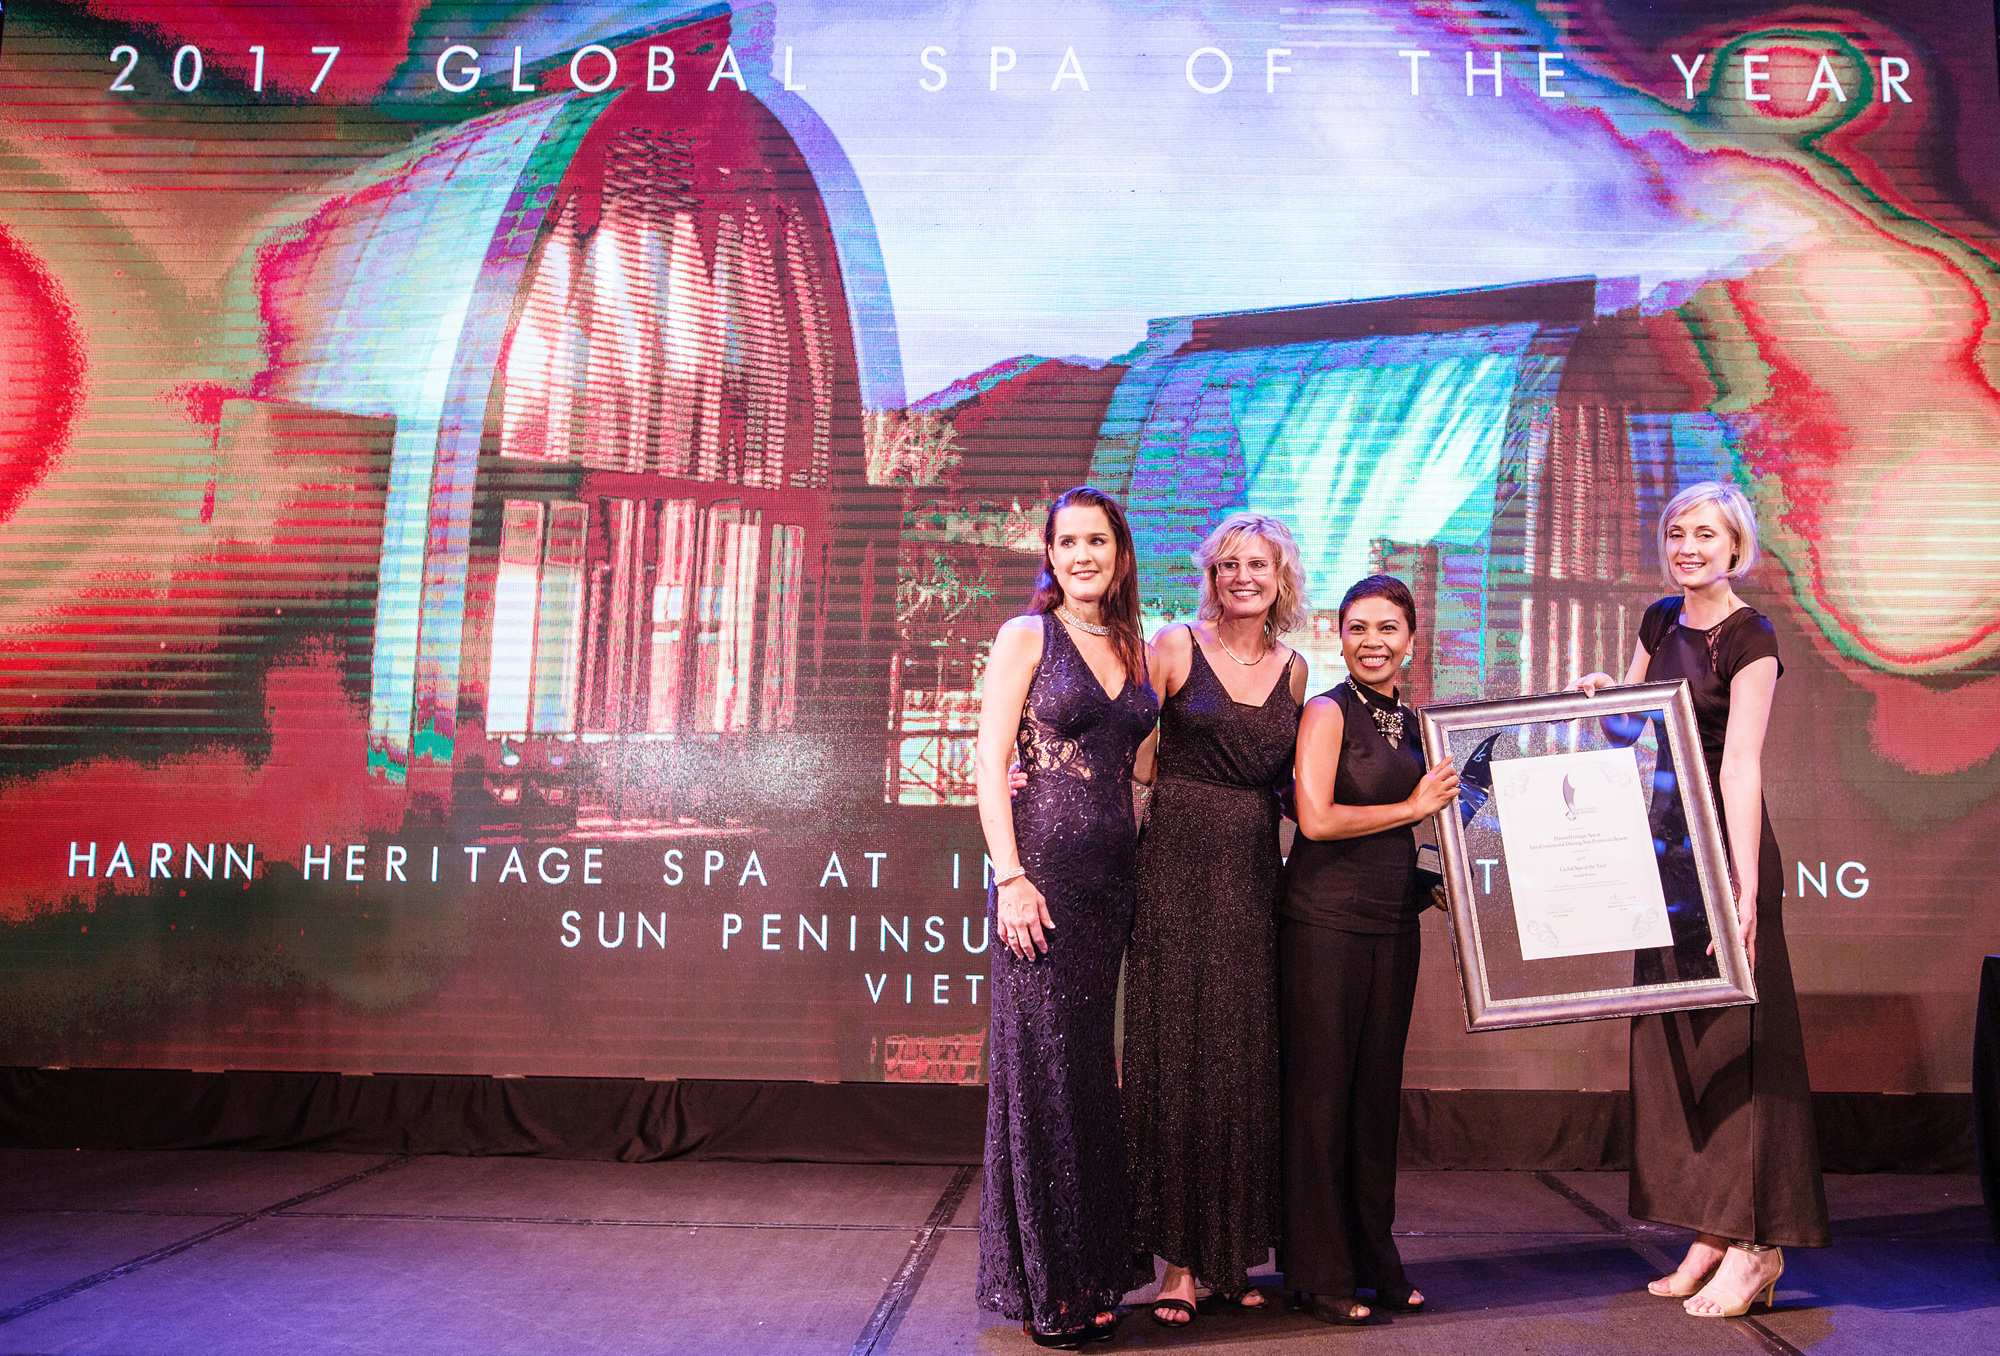 harnn heritage spa wins double at world luxury spa award 2017